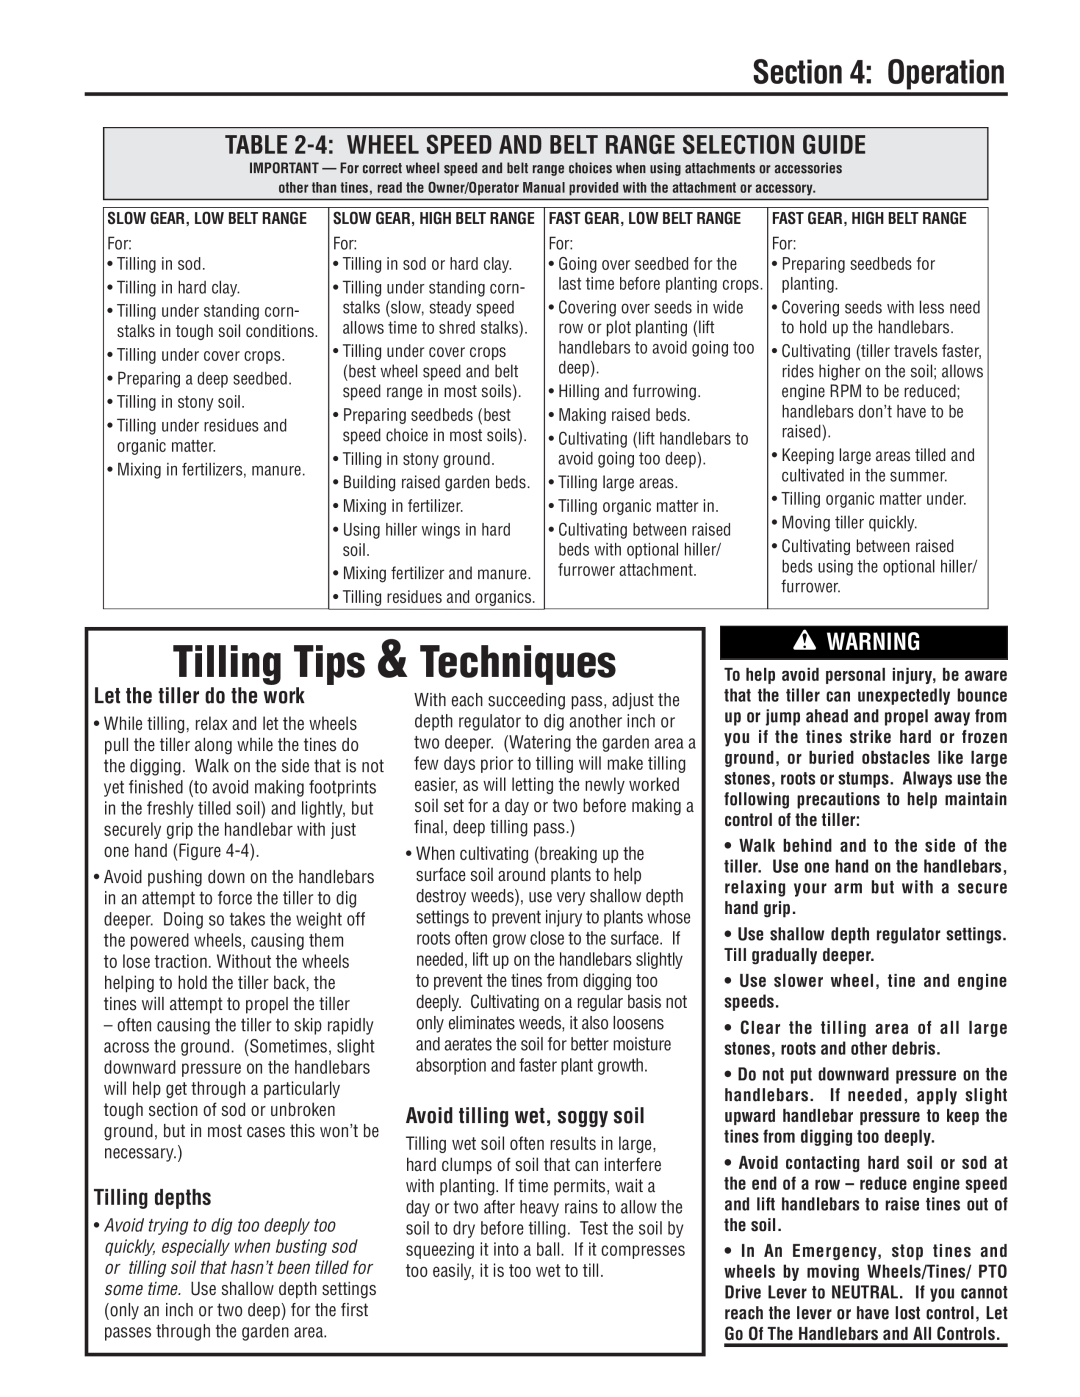 Troy-Bilt E683F Tilling Tips & Techniques, 4 WHEEL SPEED AND BELT RANGE SELECTION GUIDE, Let the tiller do the work 